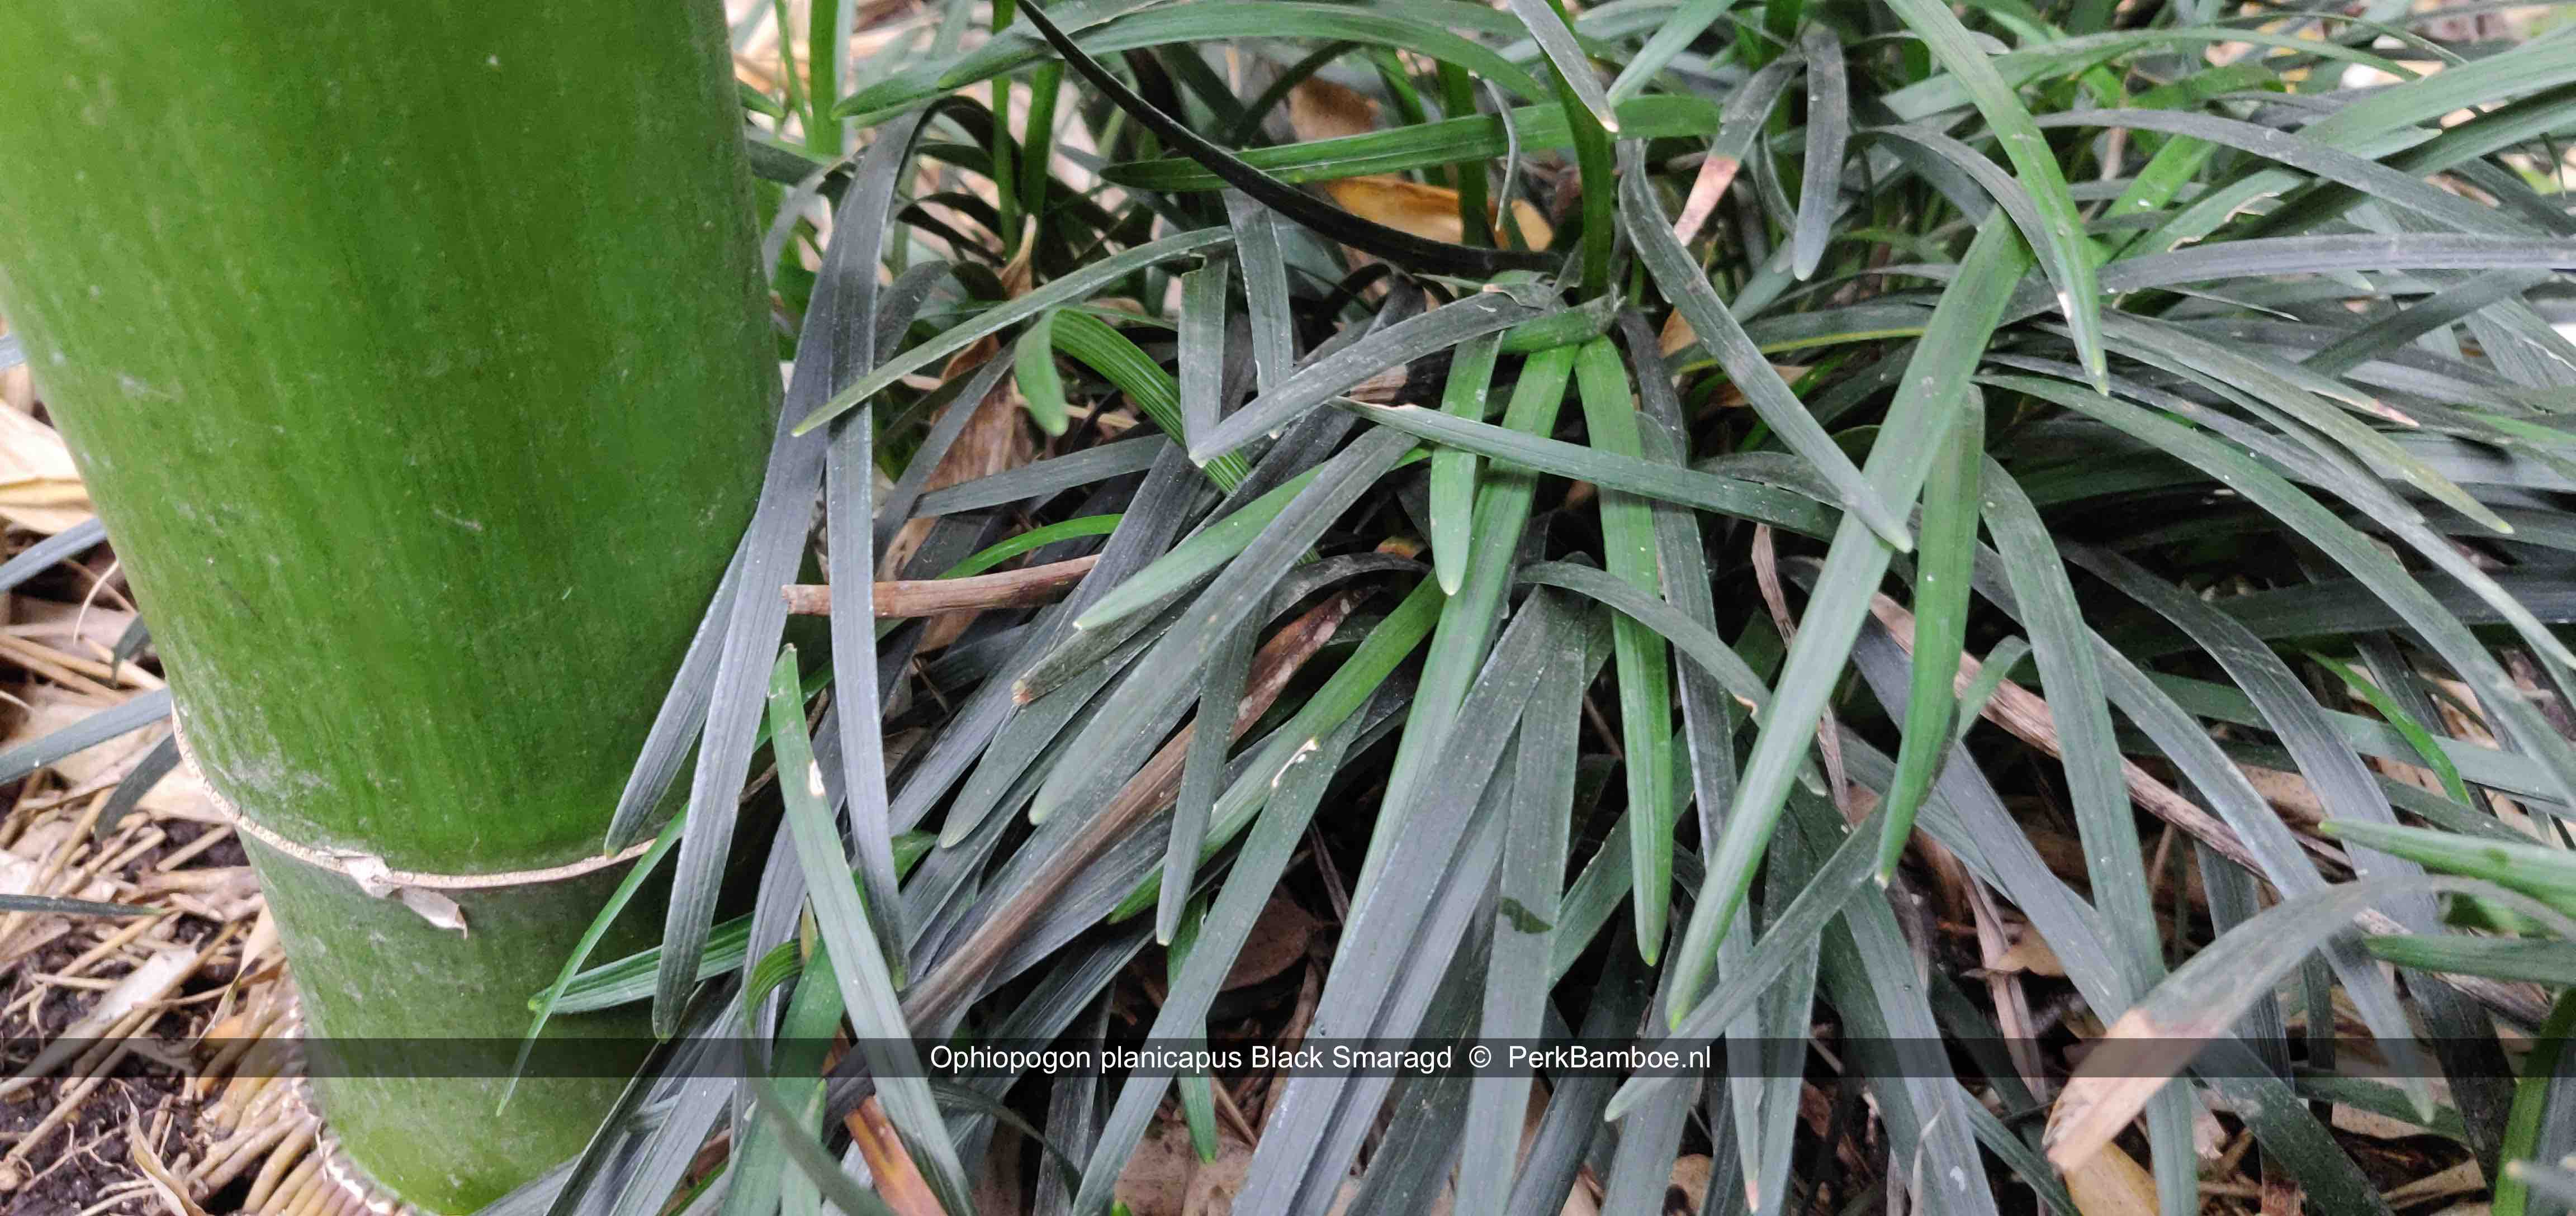 Ophiopogon planiscapus Black Smaragd voor Phyllostachys Shanghai 4 foto3 PerkBamboe nl